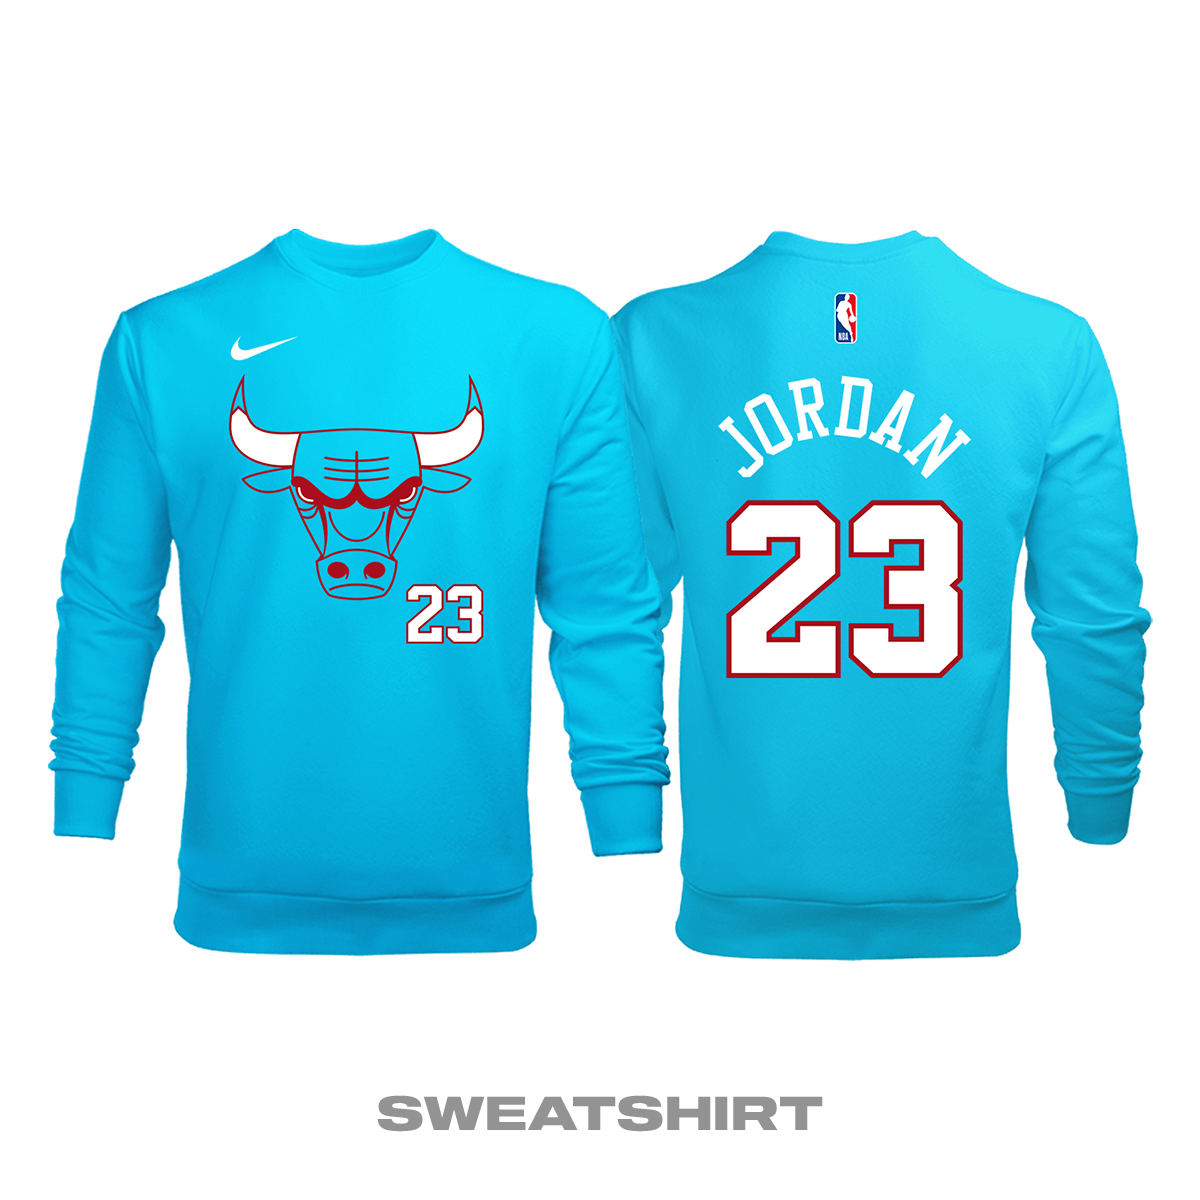 Chicago Bulls: City Edition 2019/2020 Sweatshirt